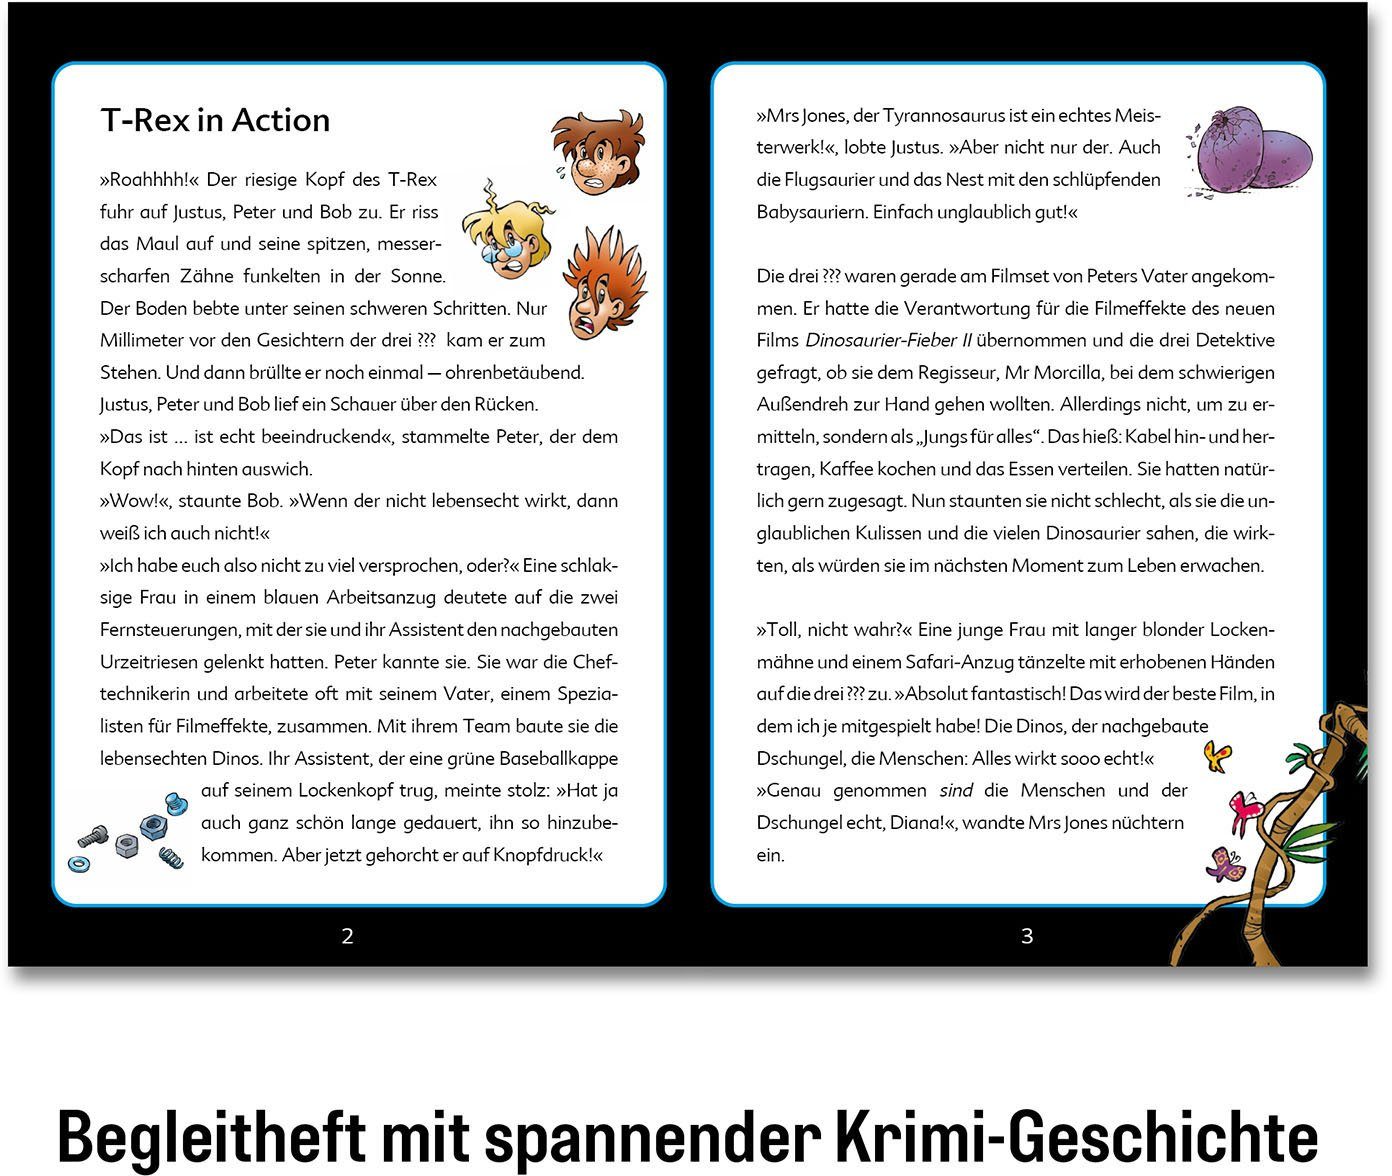 Made Krimipuzzle Germany 200 Puzzle Die Action, in Kids T-Rex in Puzzleteile, drei ??? Kosmos